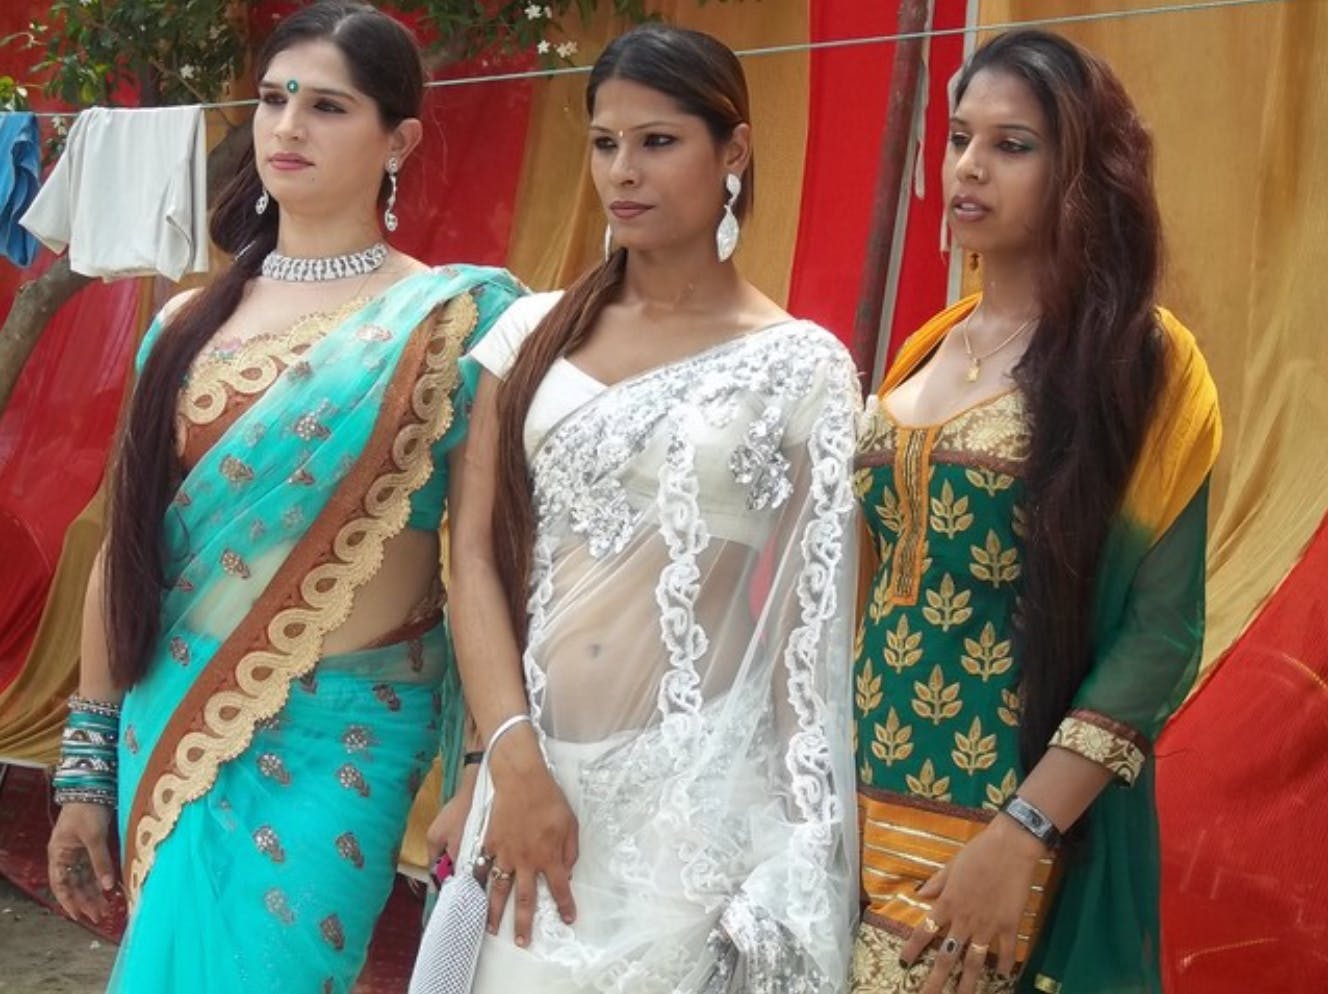 the Hijras